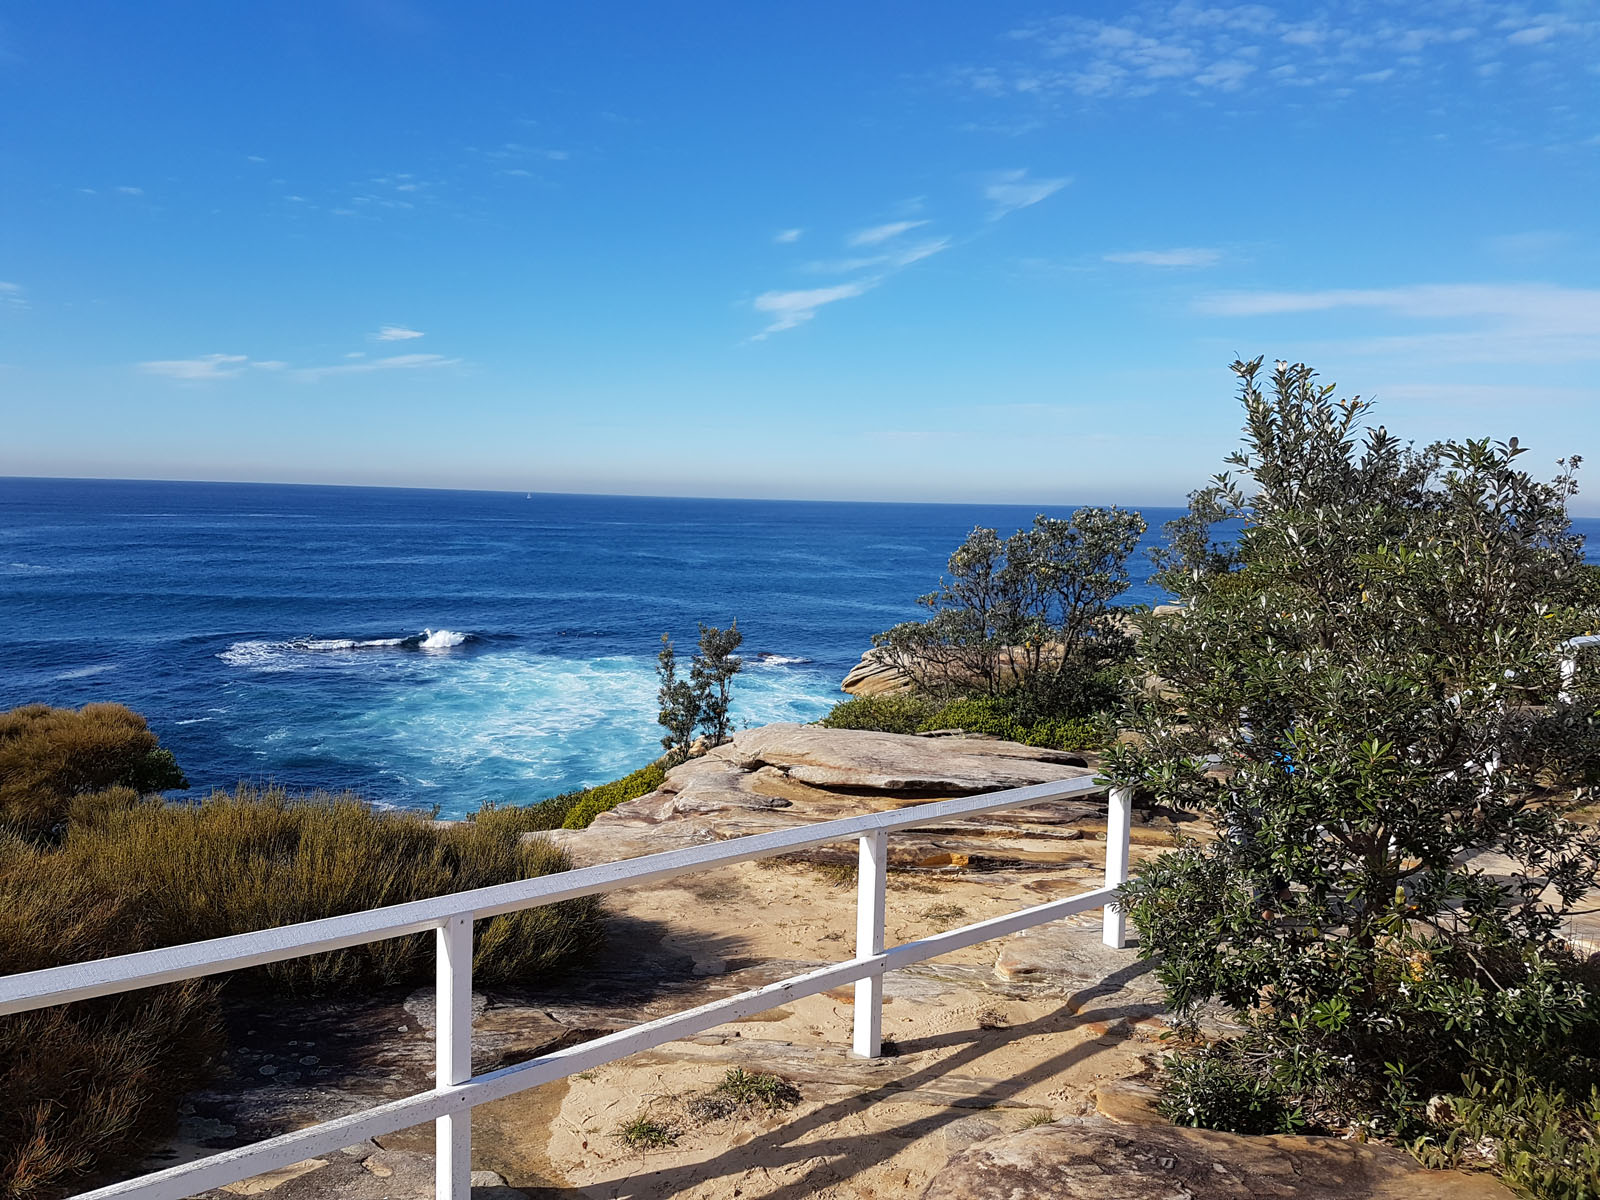 SGMT Australia Sydney_Bondi to Coogee Coastal Walk_09 Sea and vegetation